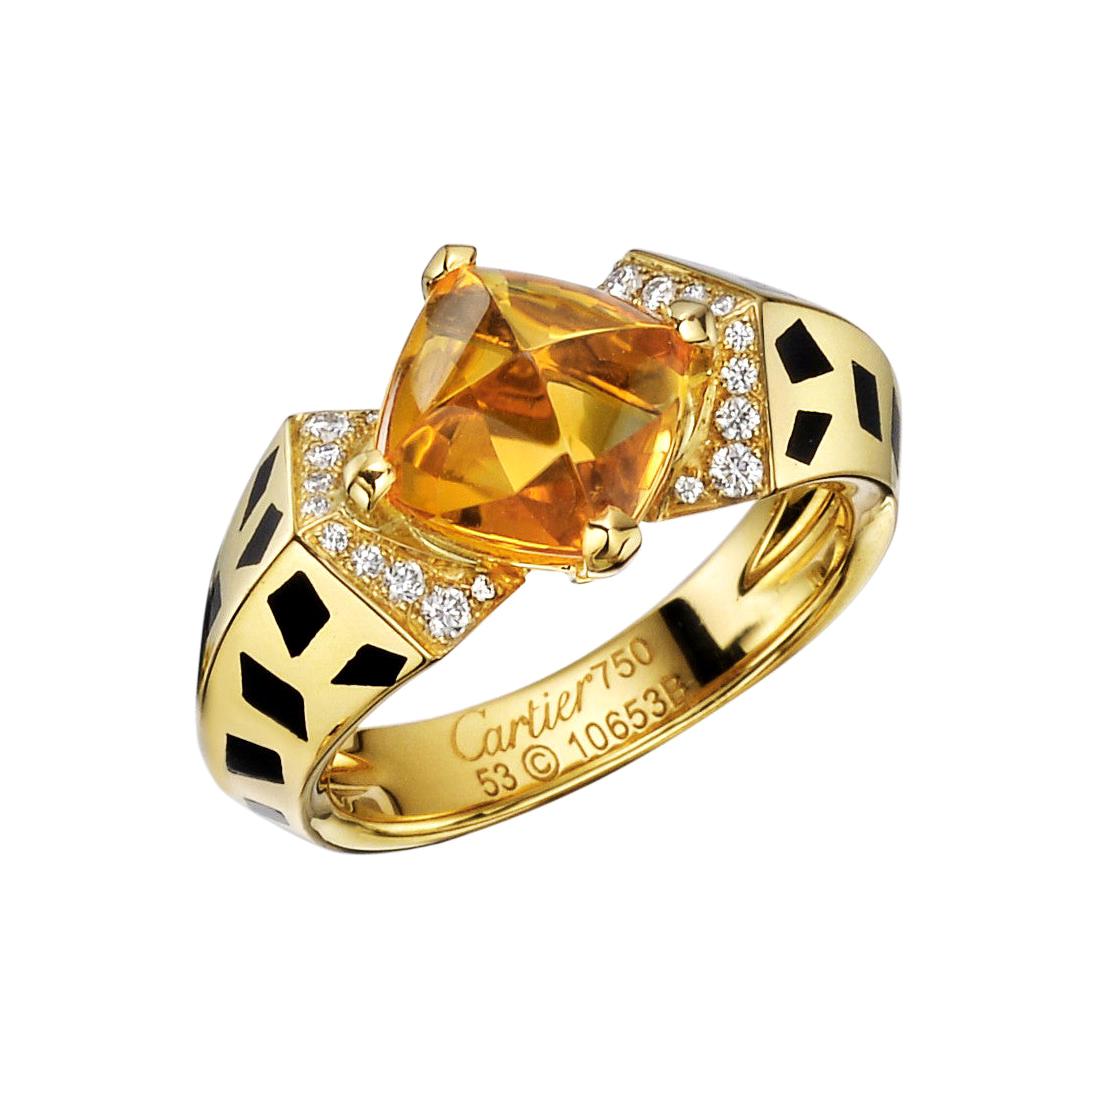 Cartier 18 Karat Yellow Gold, Citrine and Diamond "Panthère" Ring